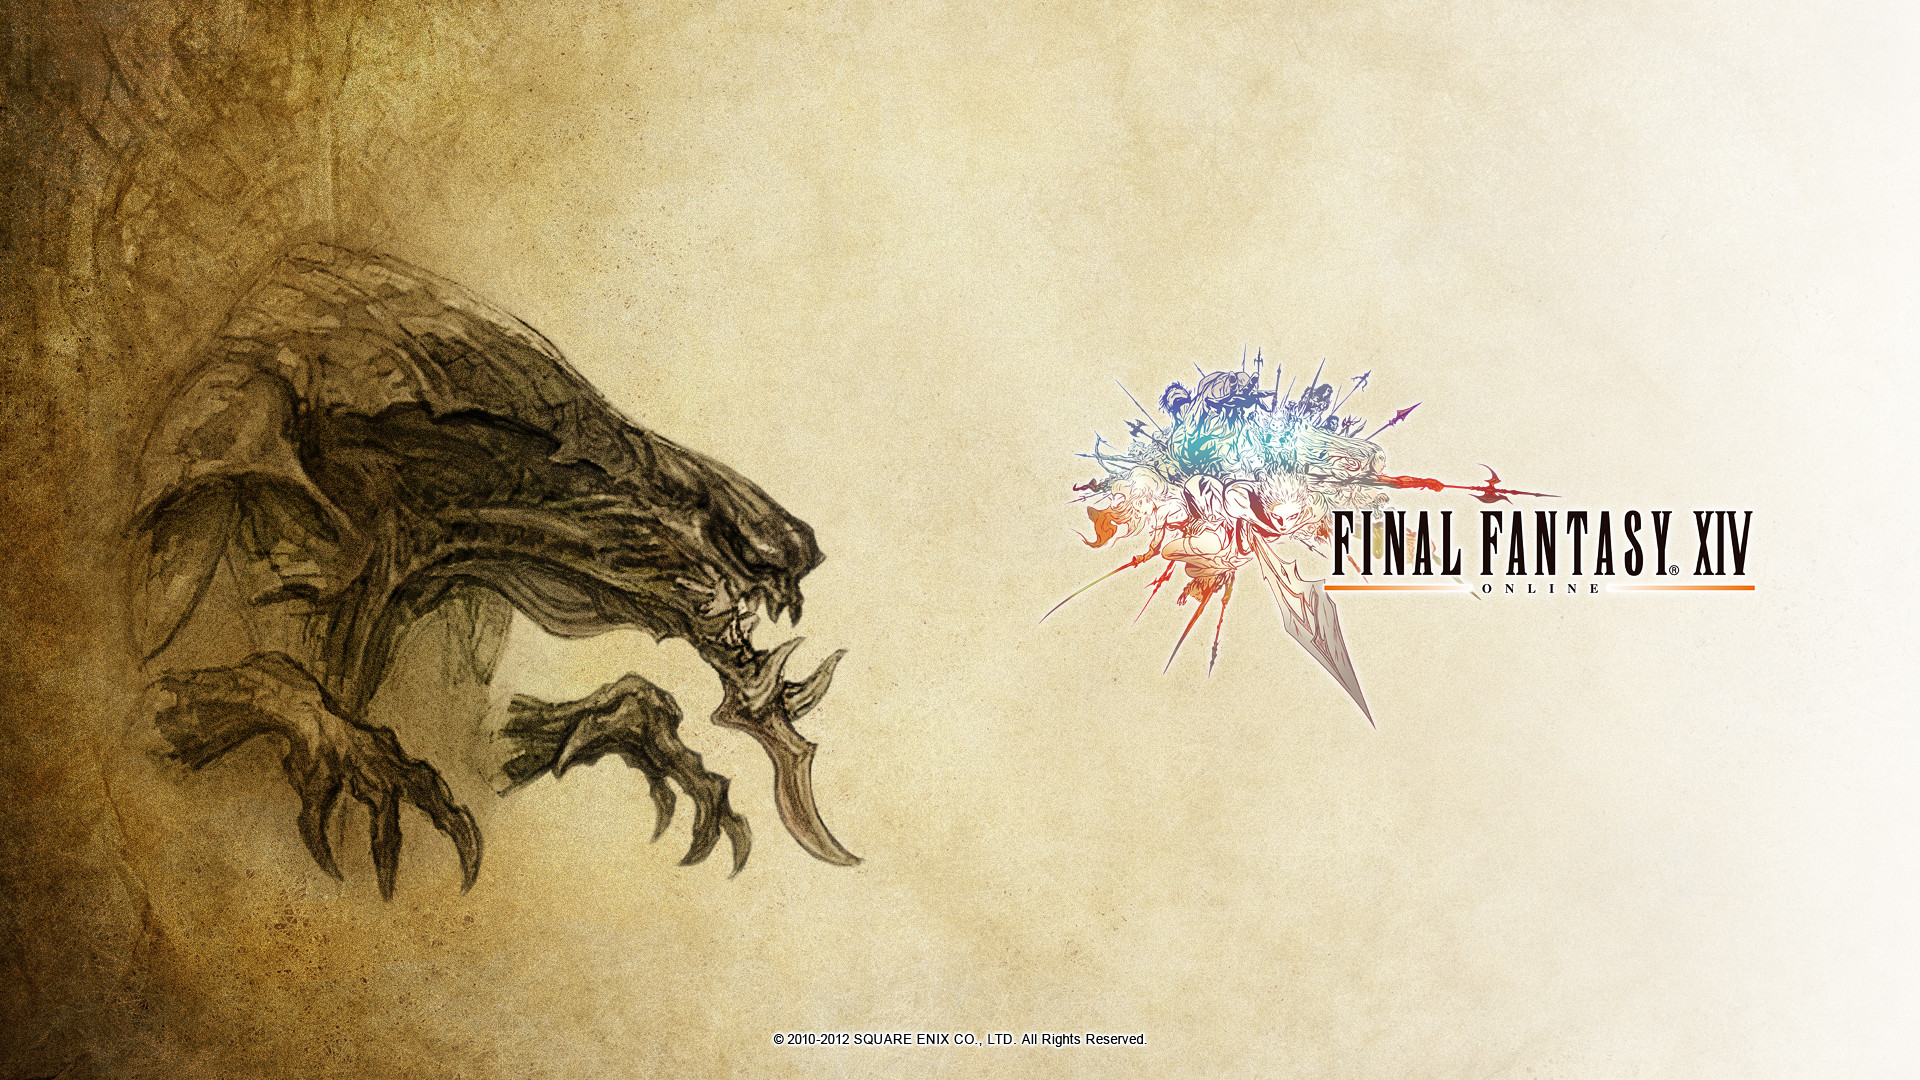 Image – FFXIV Wallpaper Demon Wall Final Fantasy Wiki FANDOM powered by Wikia